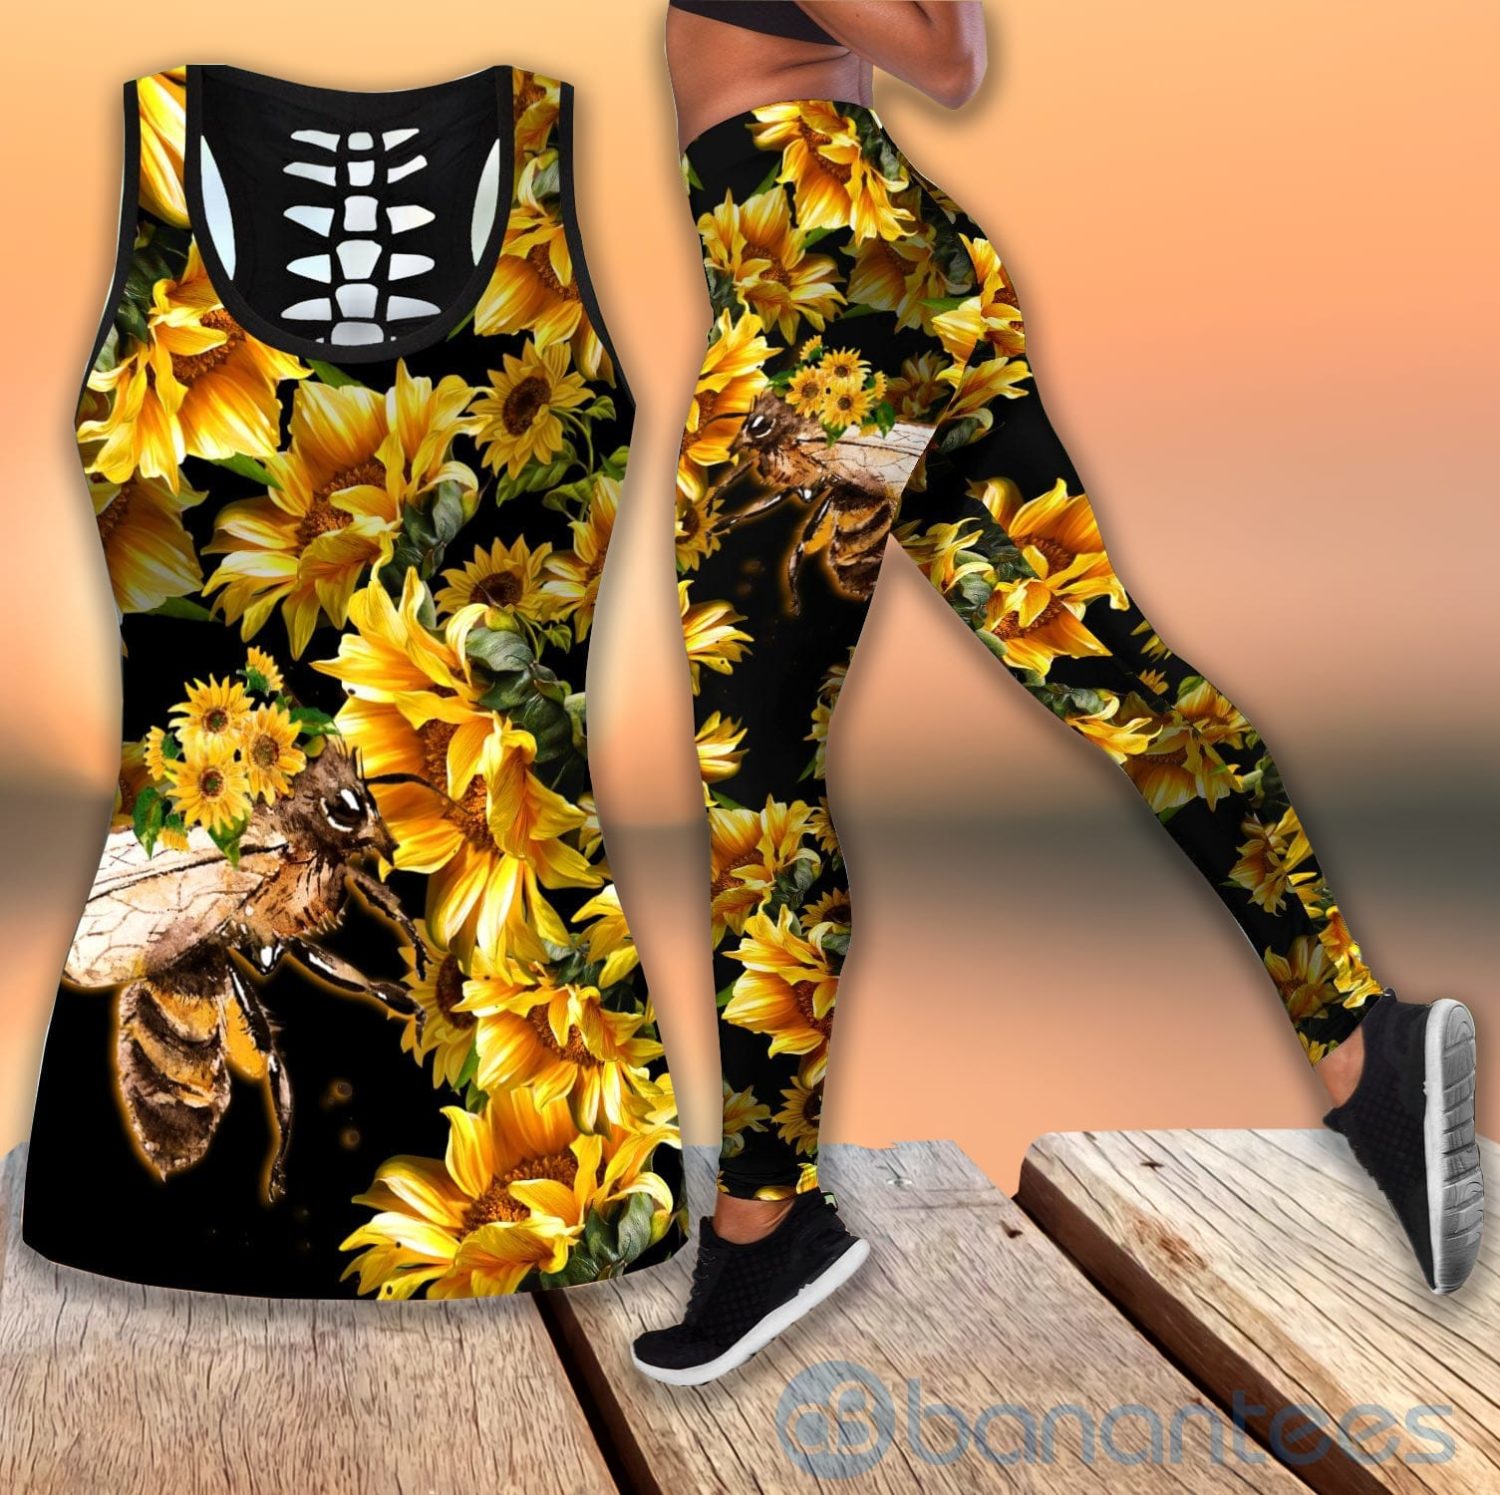 Love Bee Mandala Sunflower Tank Top Legging Set Outfit Product photo 1